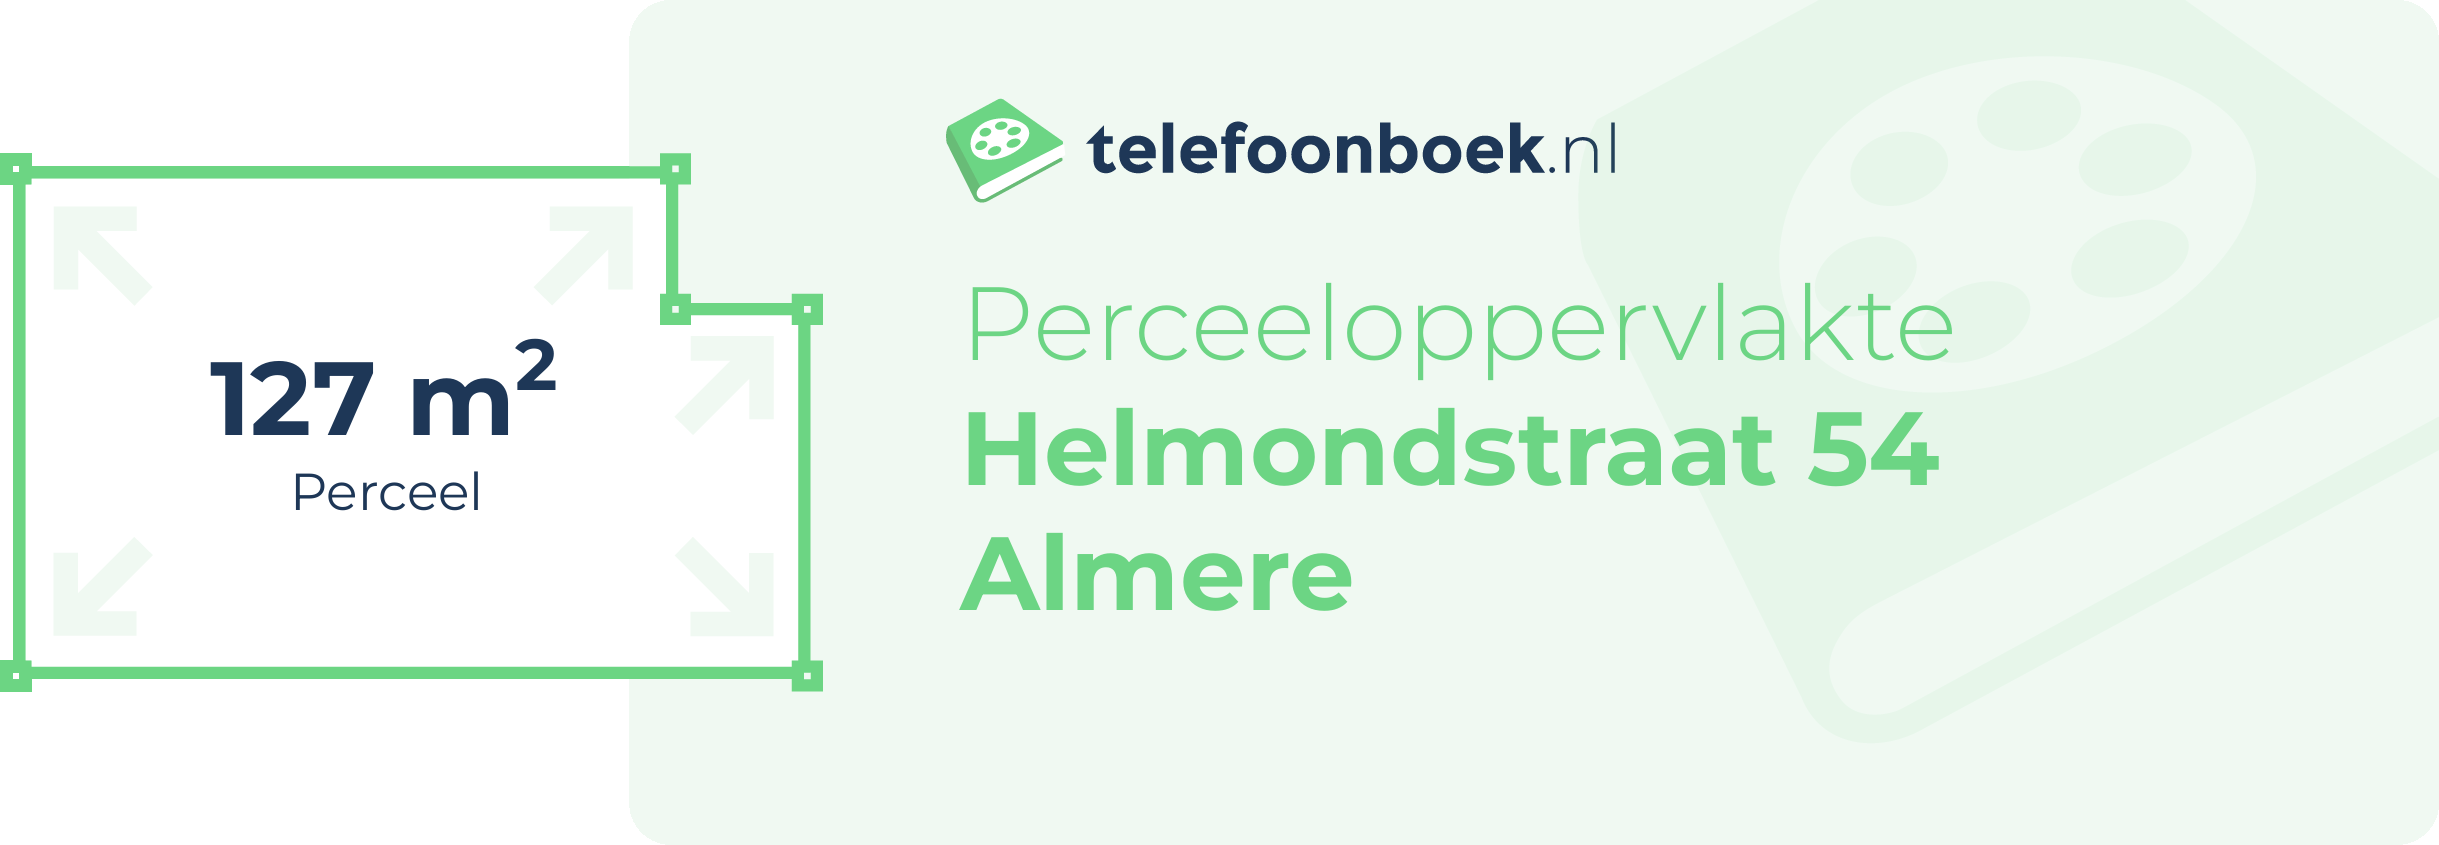 Perceeloppervlakte Helmondstraat 54 Almere